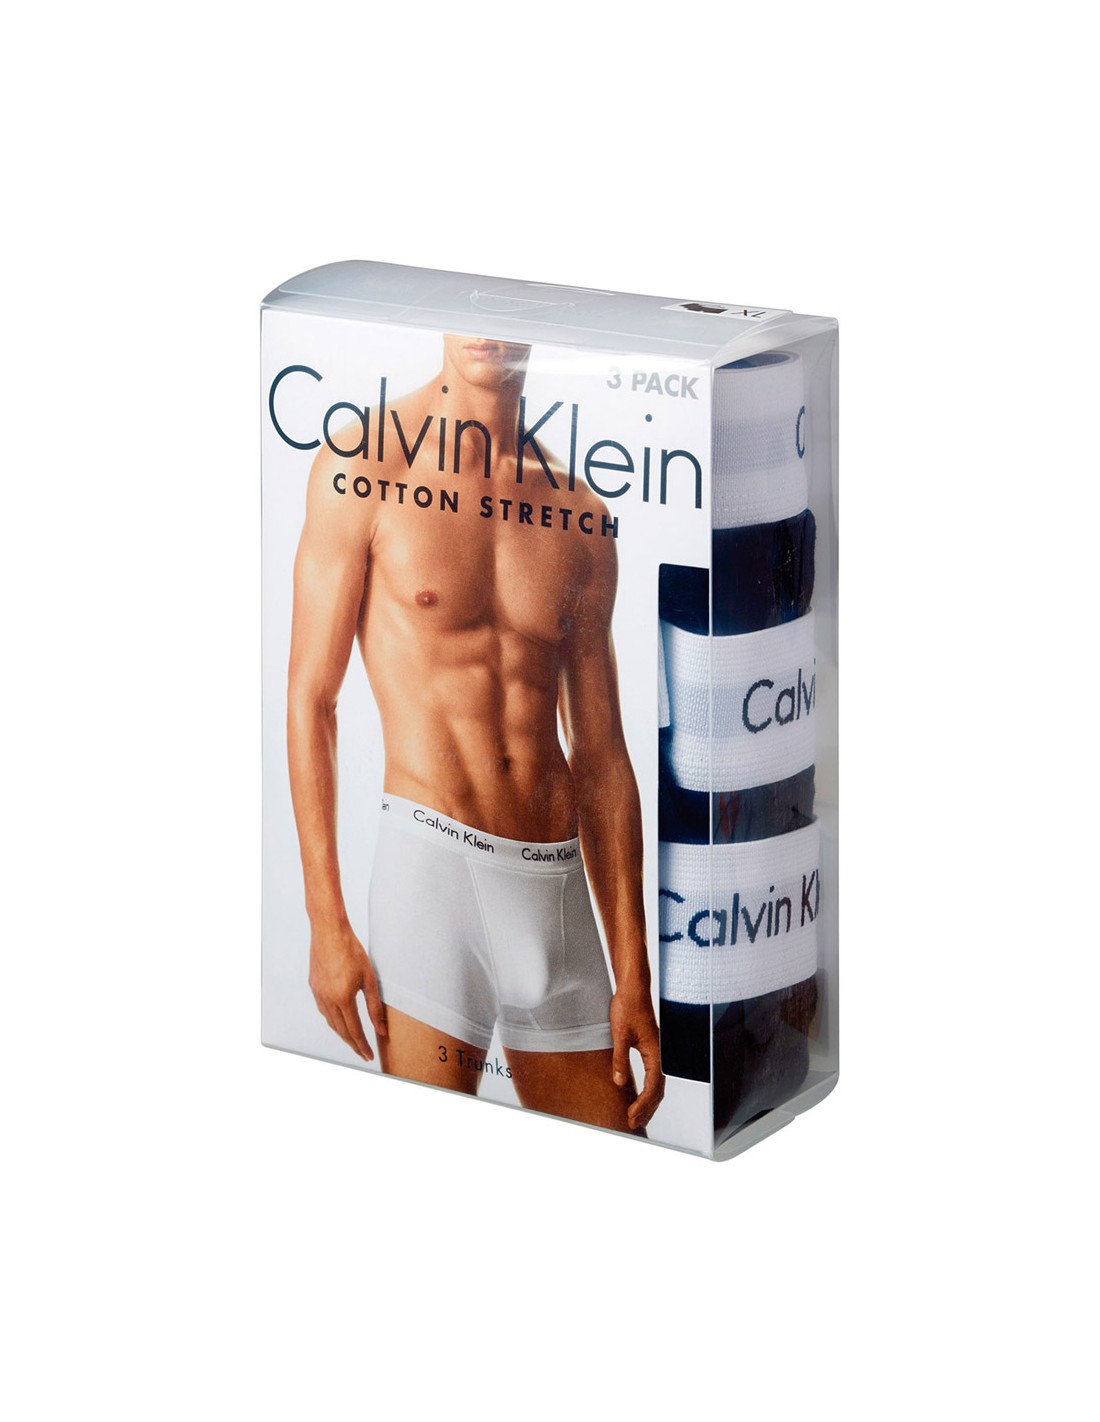 CALVIN KLEIN Cotton Stretch - Boxers Pack 3